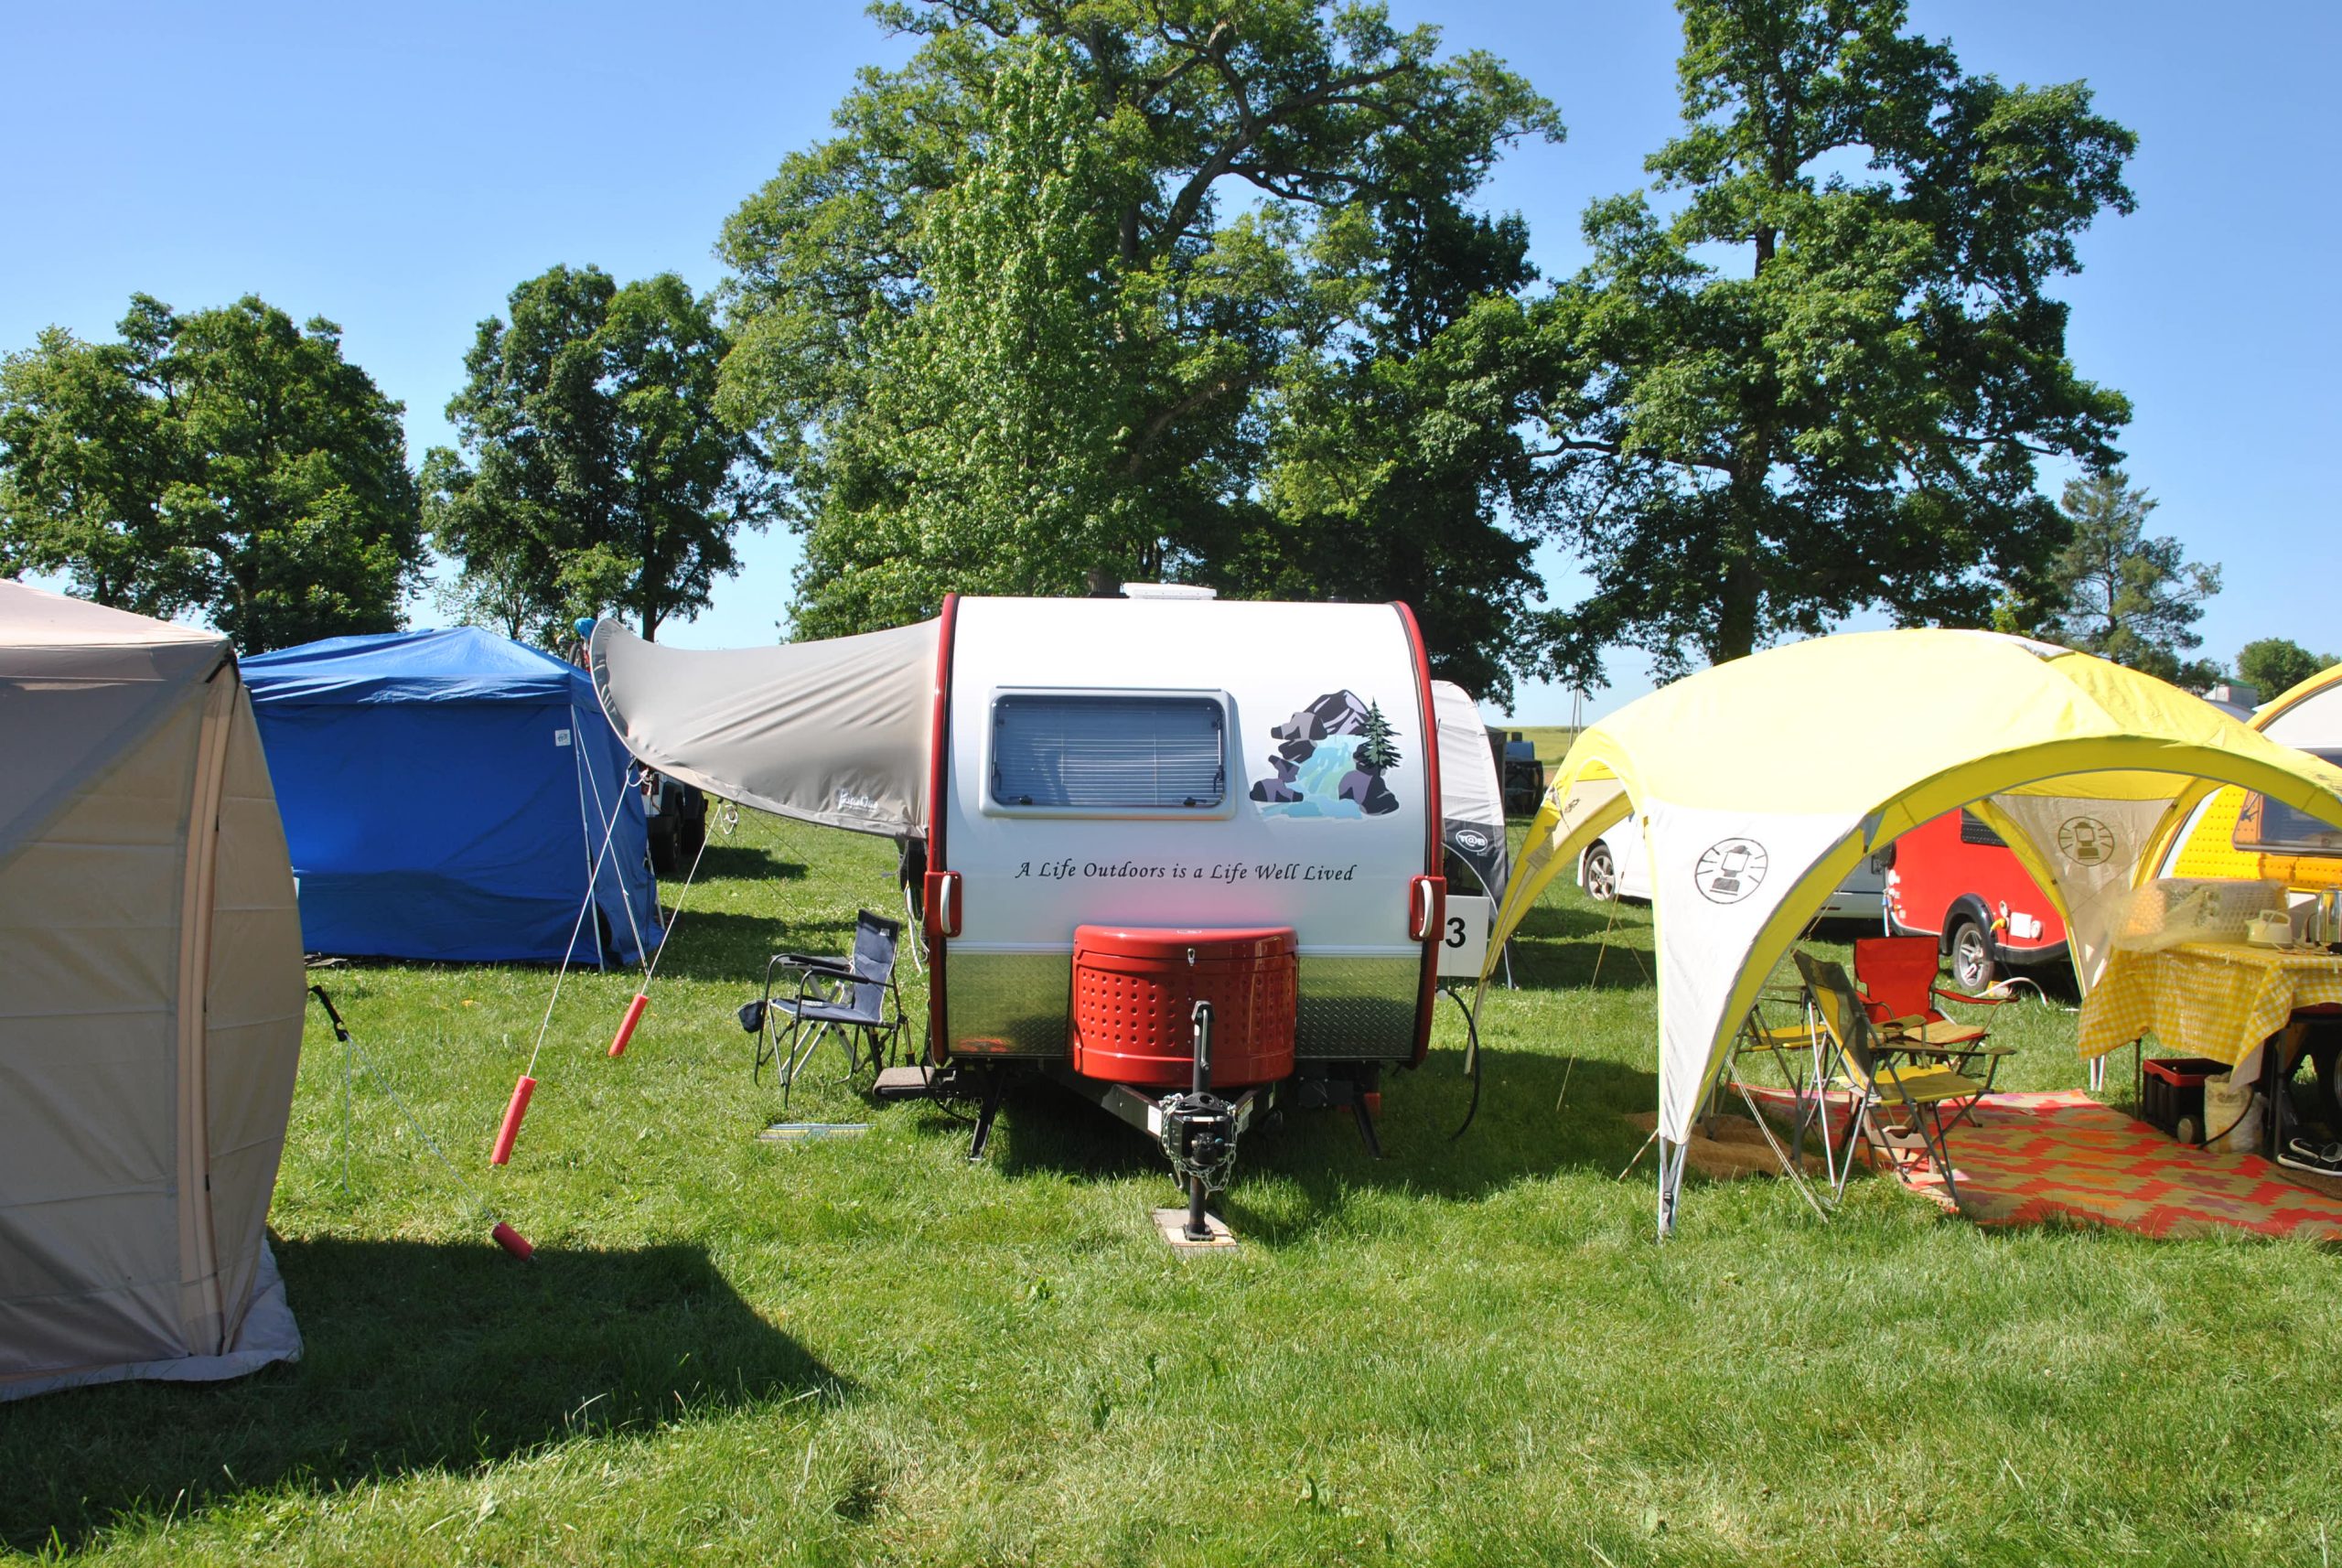 Easy Grip Camping Car : Accessoires camping-car : caravane - Camp